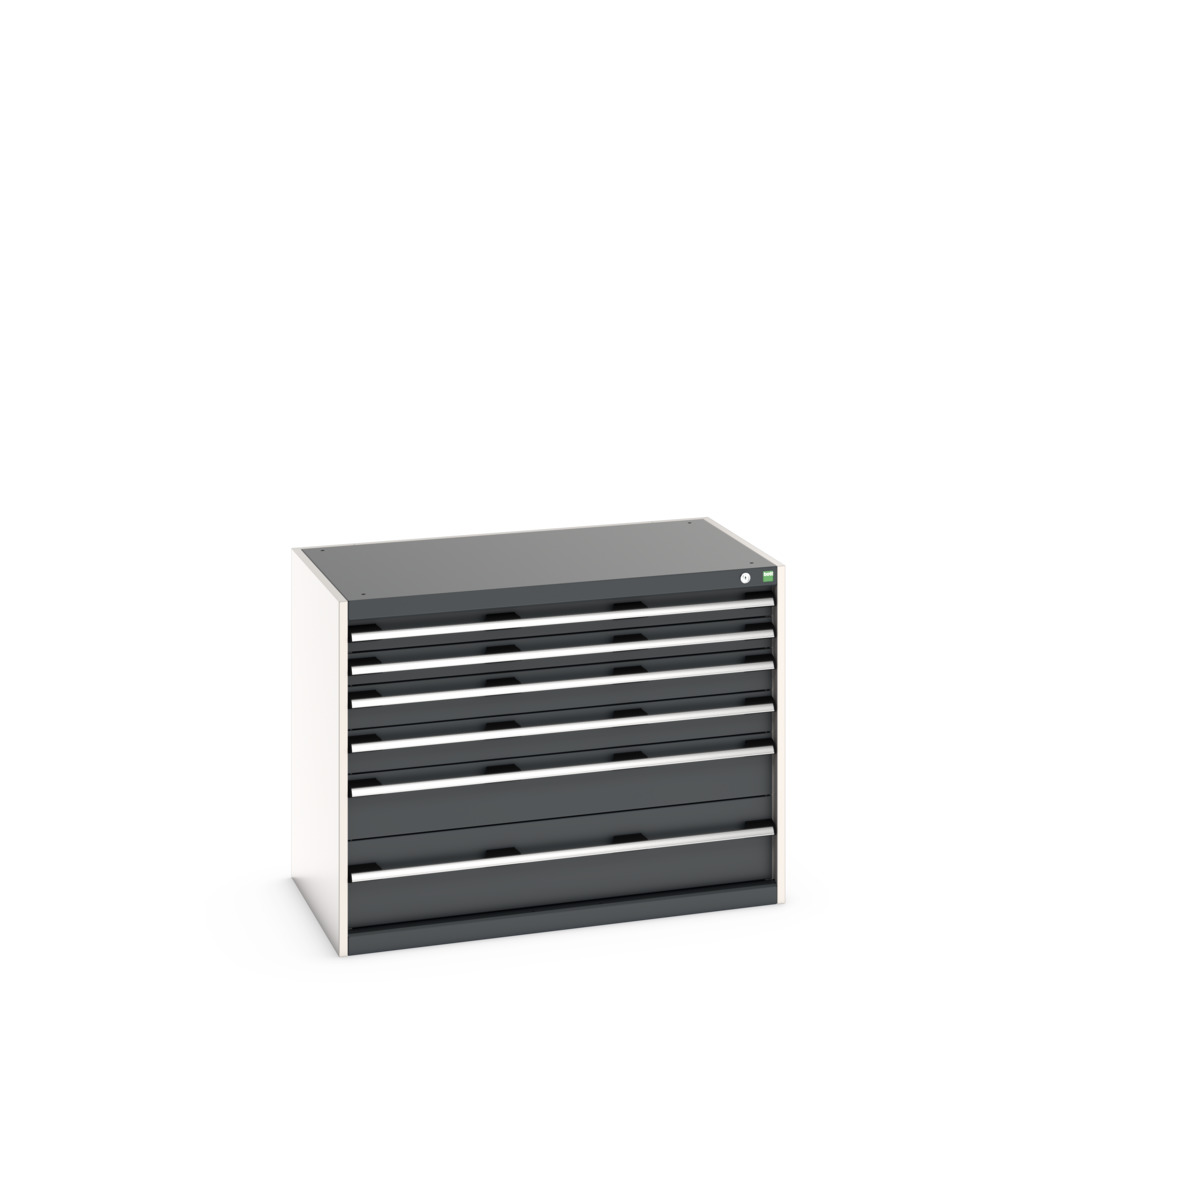 40021192. - cubio drawer cabinet